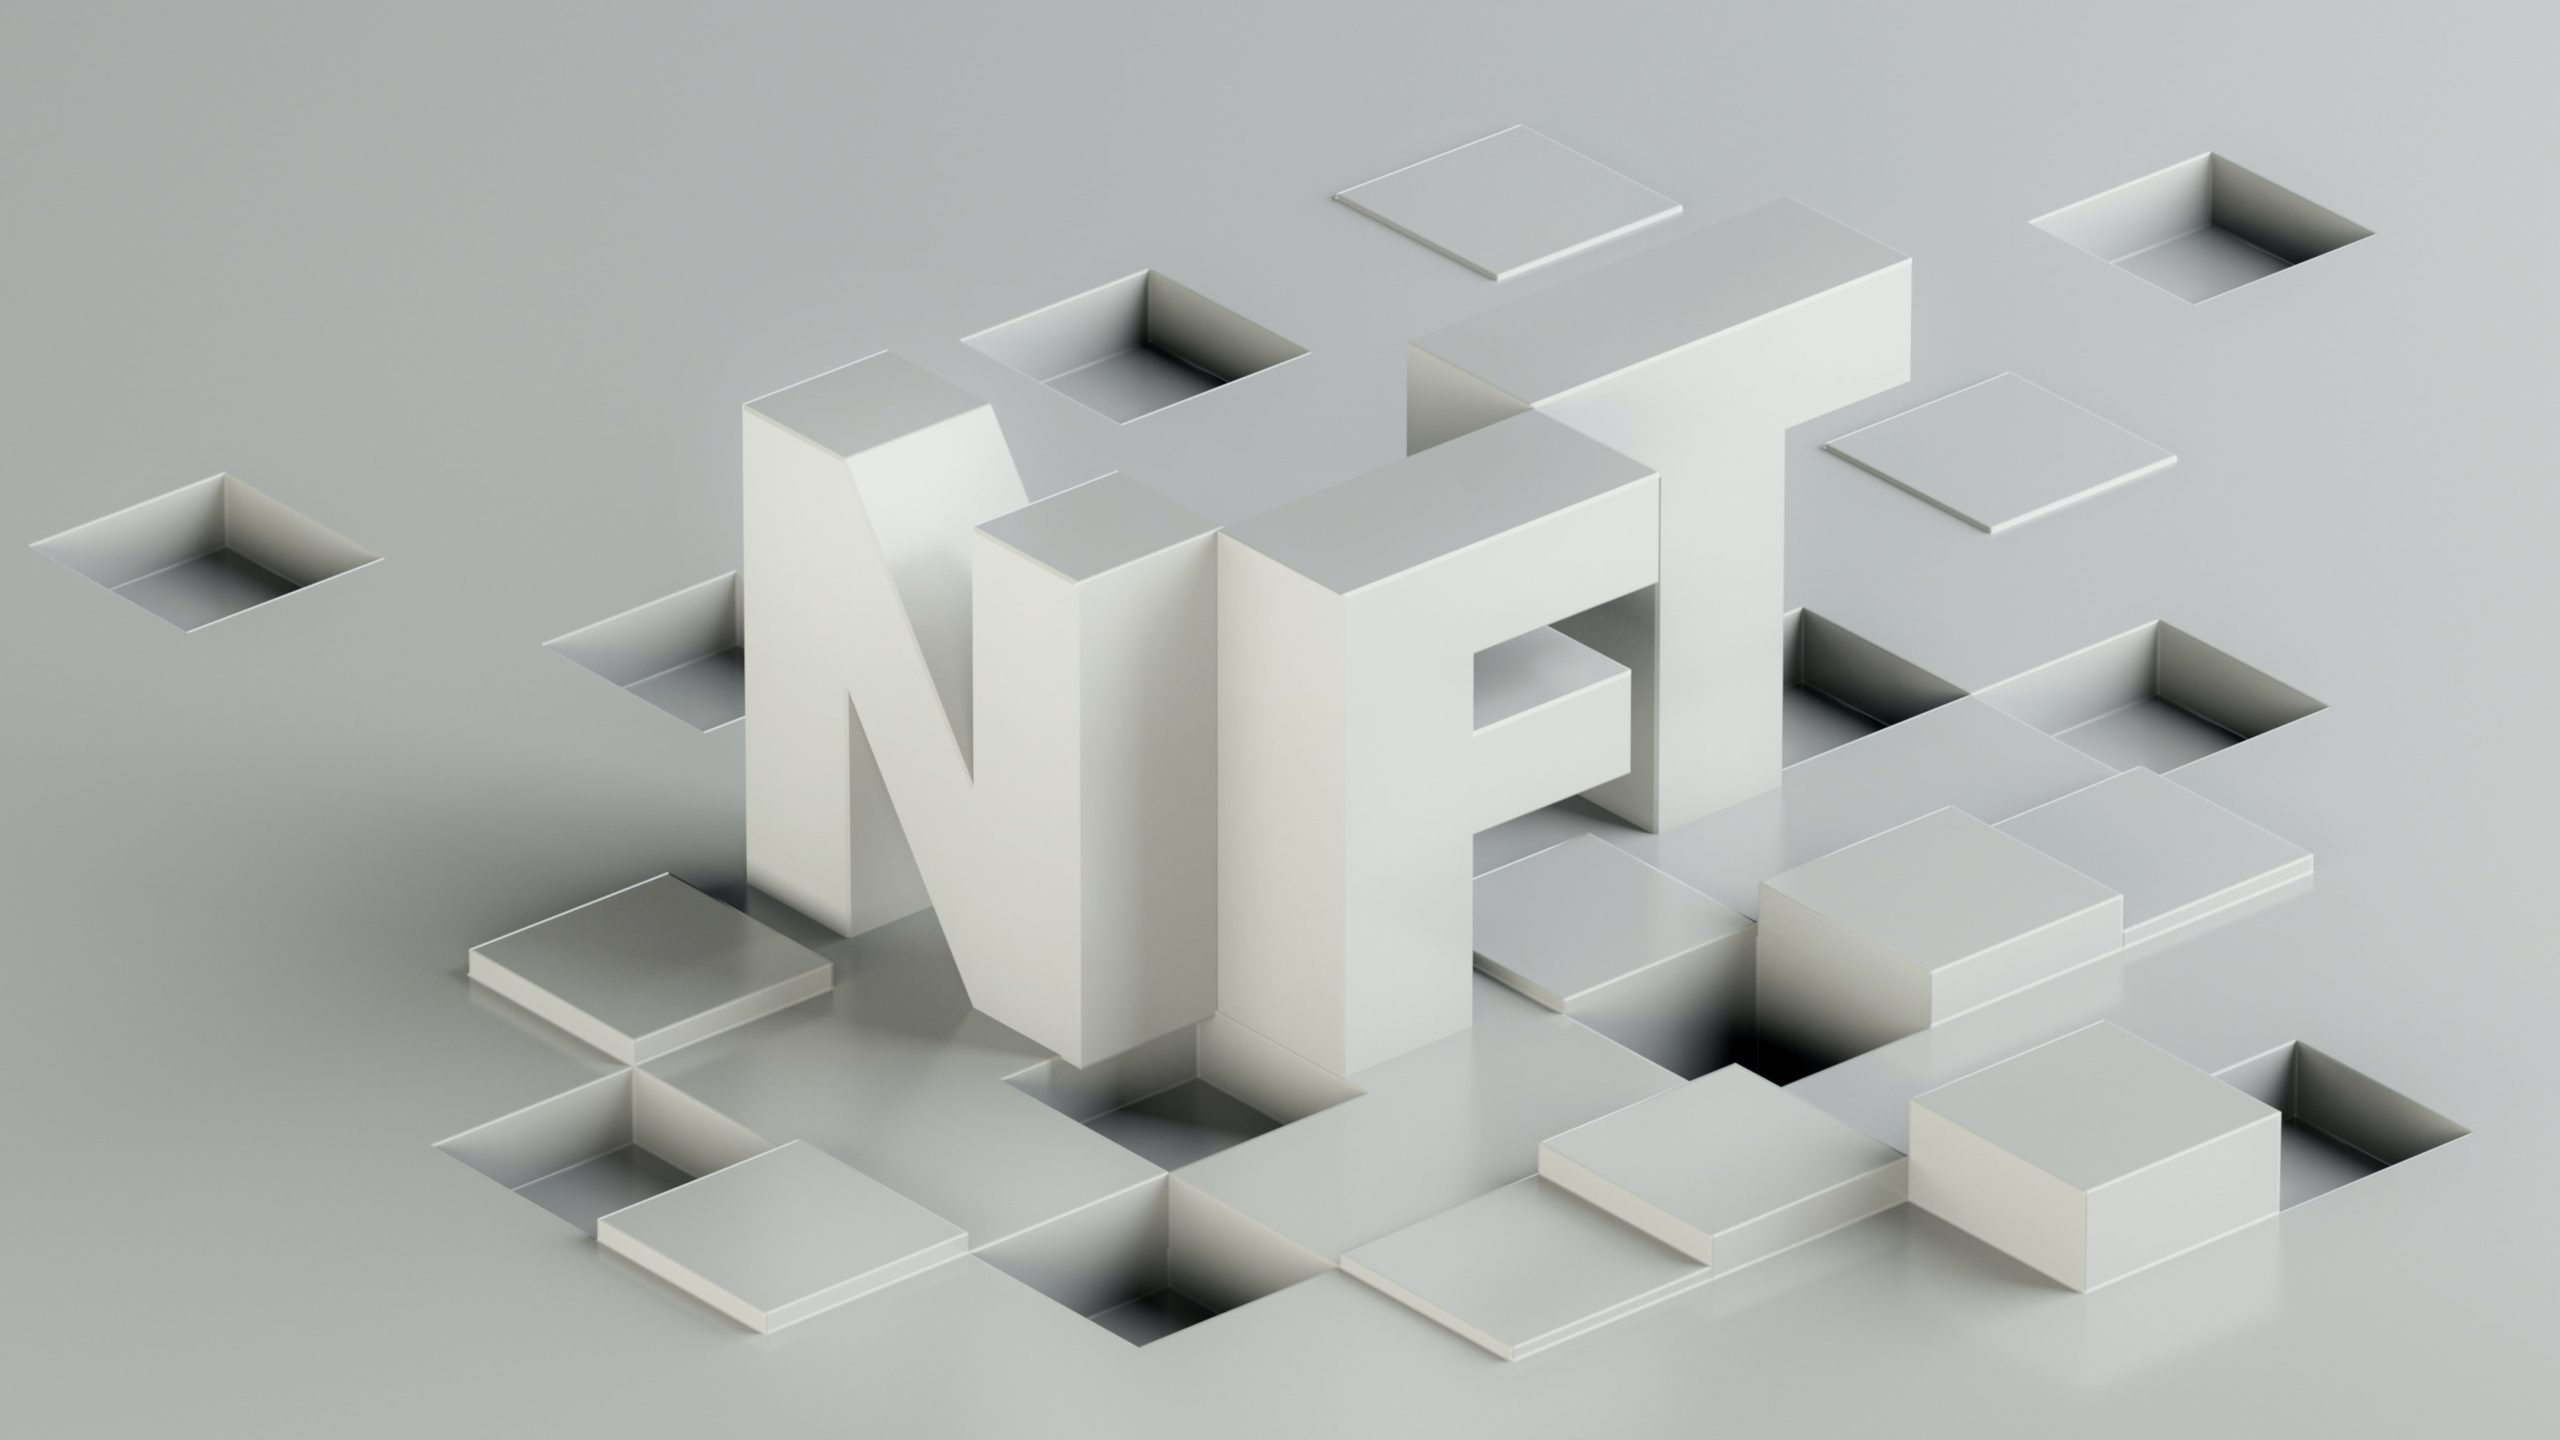 How to make an NFT